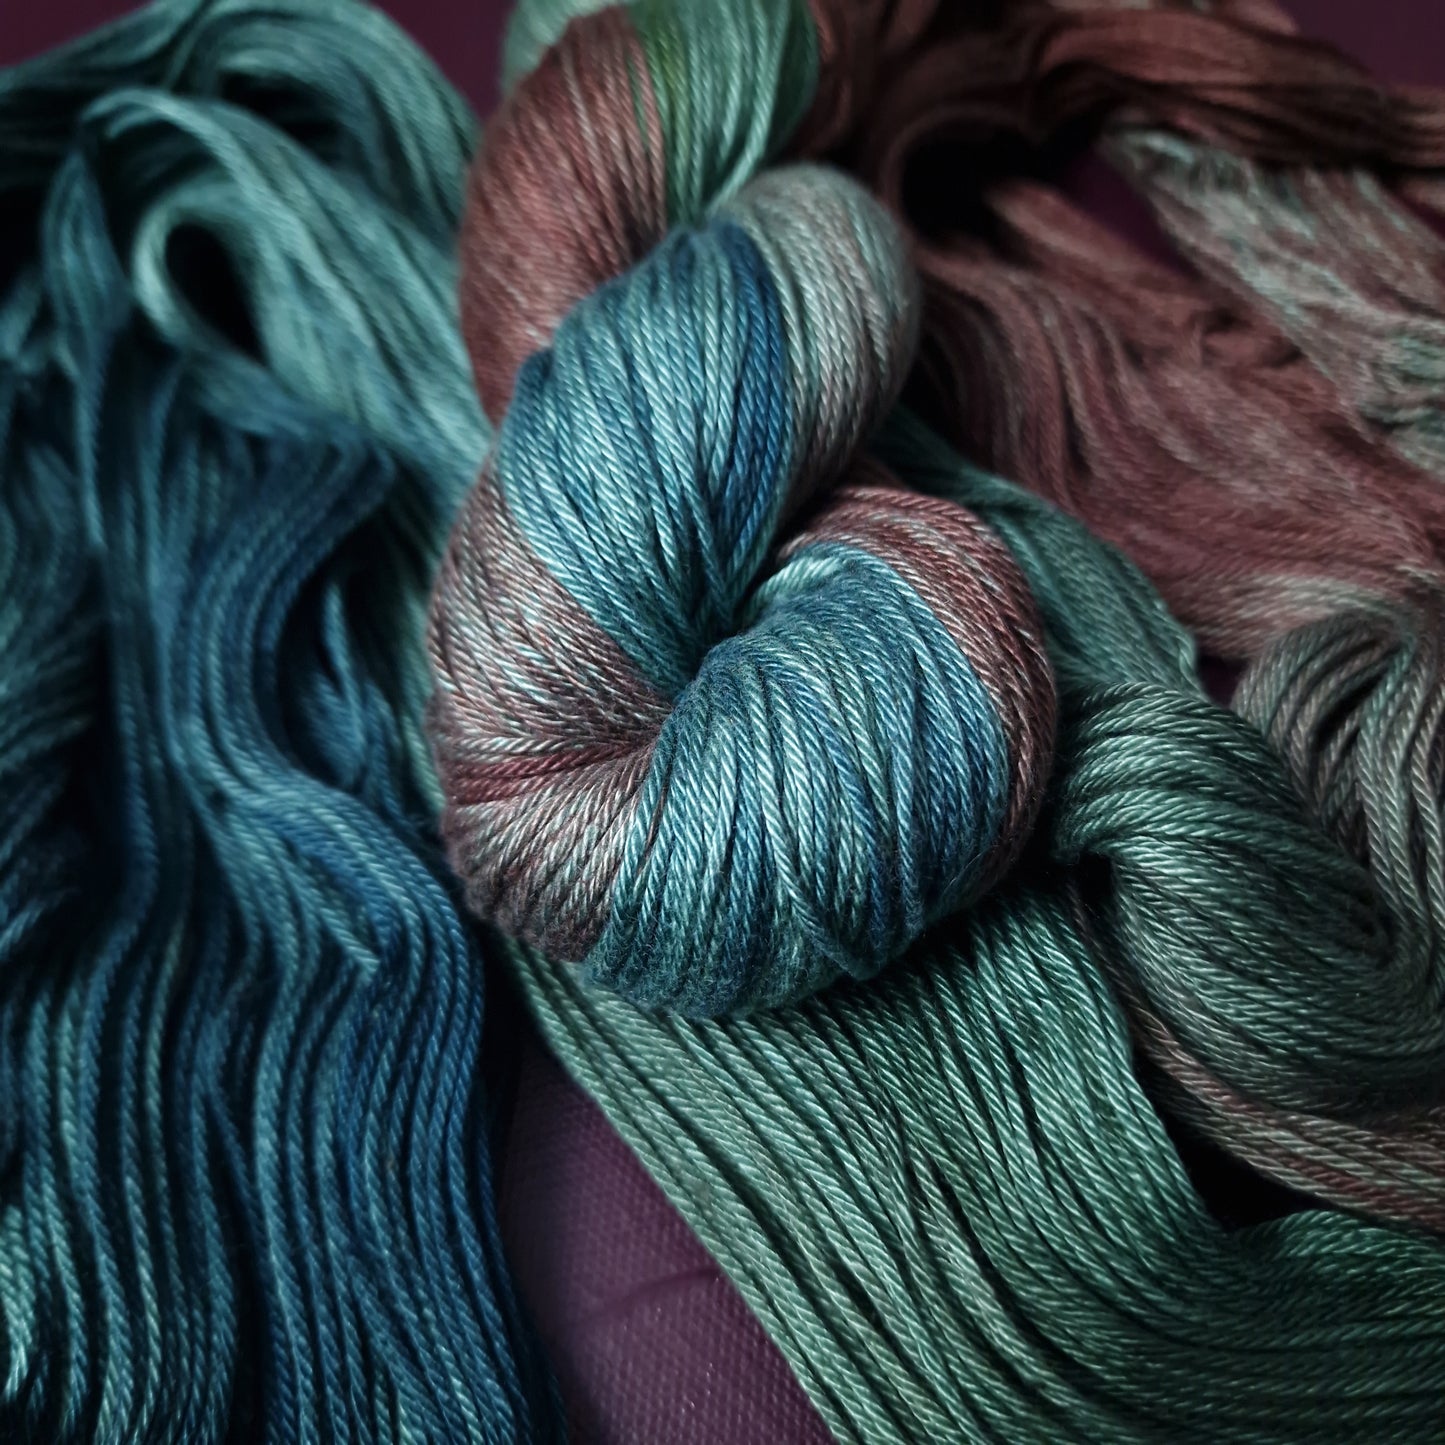 Hand dyed yarn ~ Mermaids Land~ mercerized cotton yarn, vegan, hand painted, indie dyed